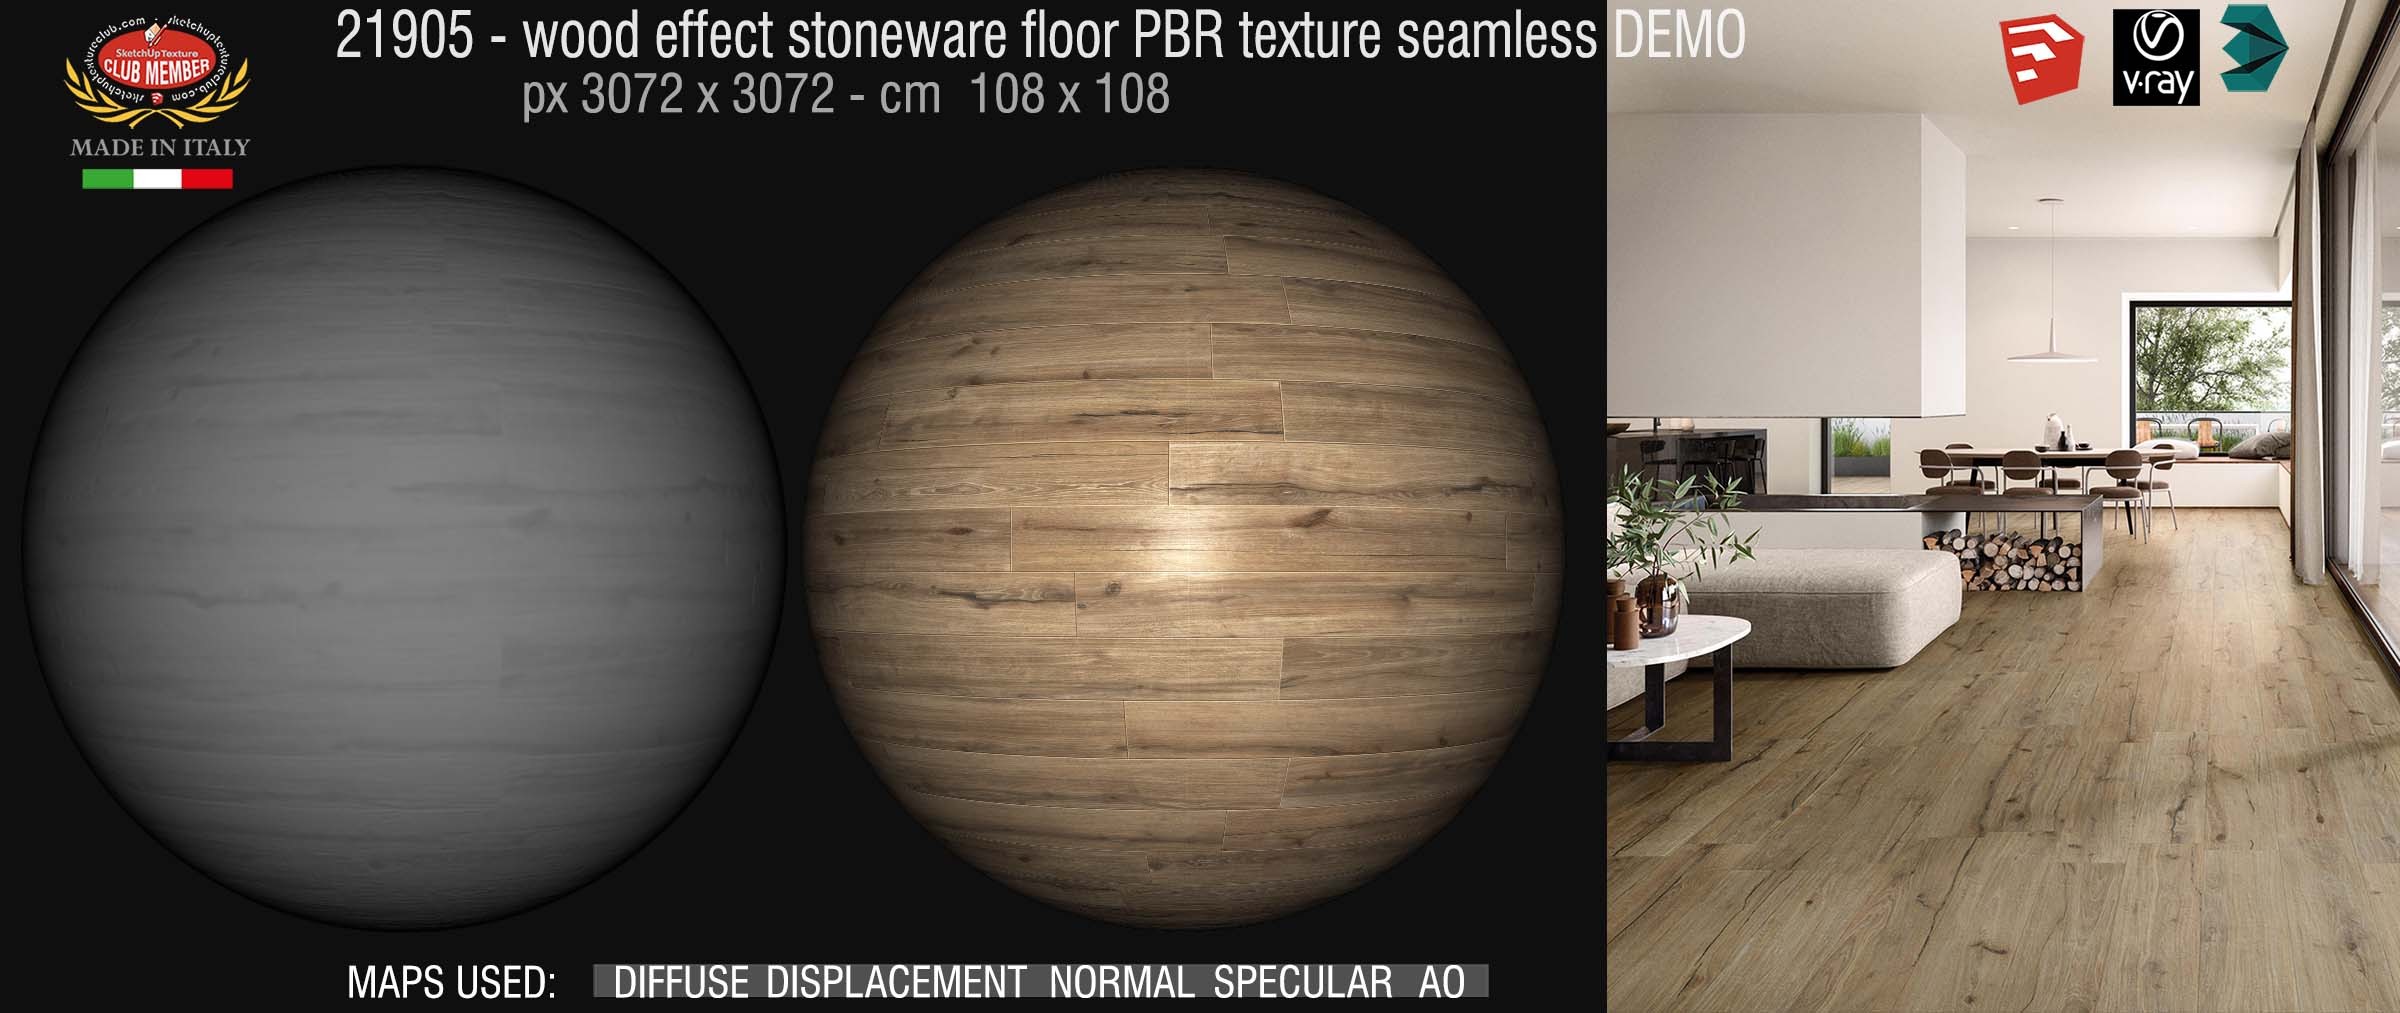 21905 wood effect stoneware floor PBR texture seamless DEMO